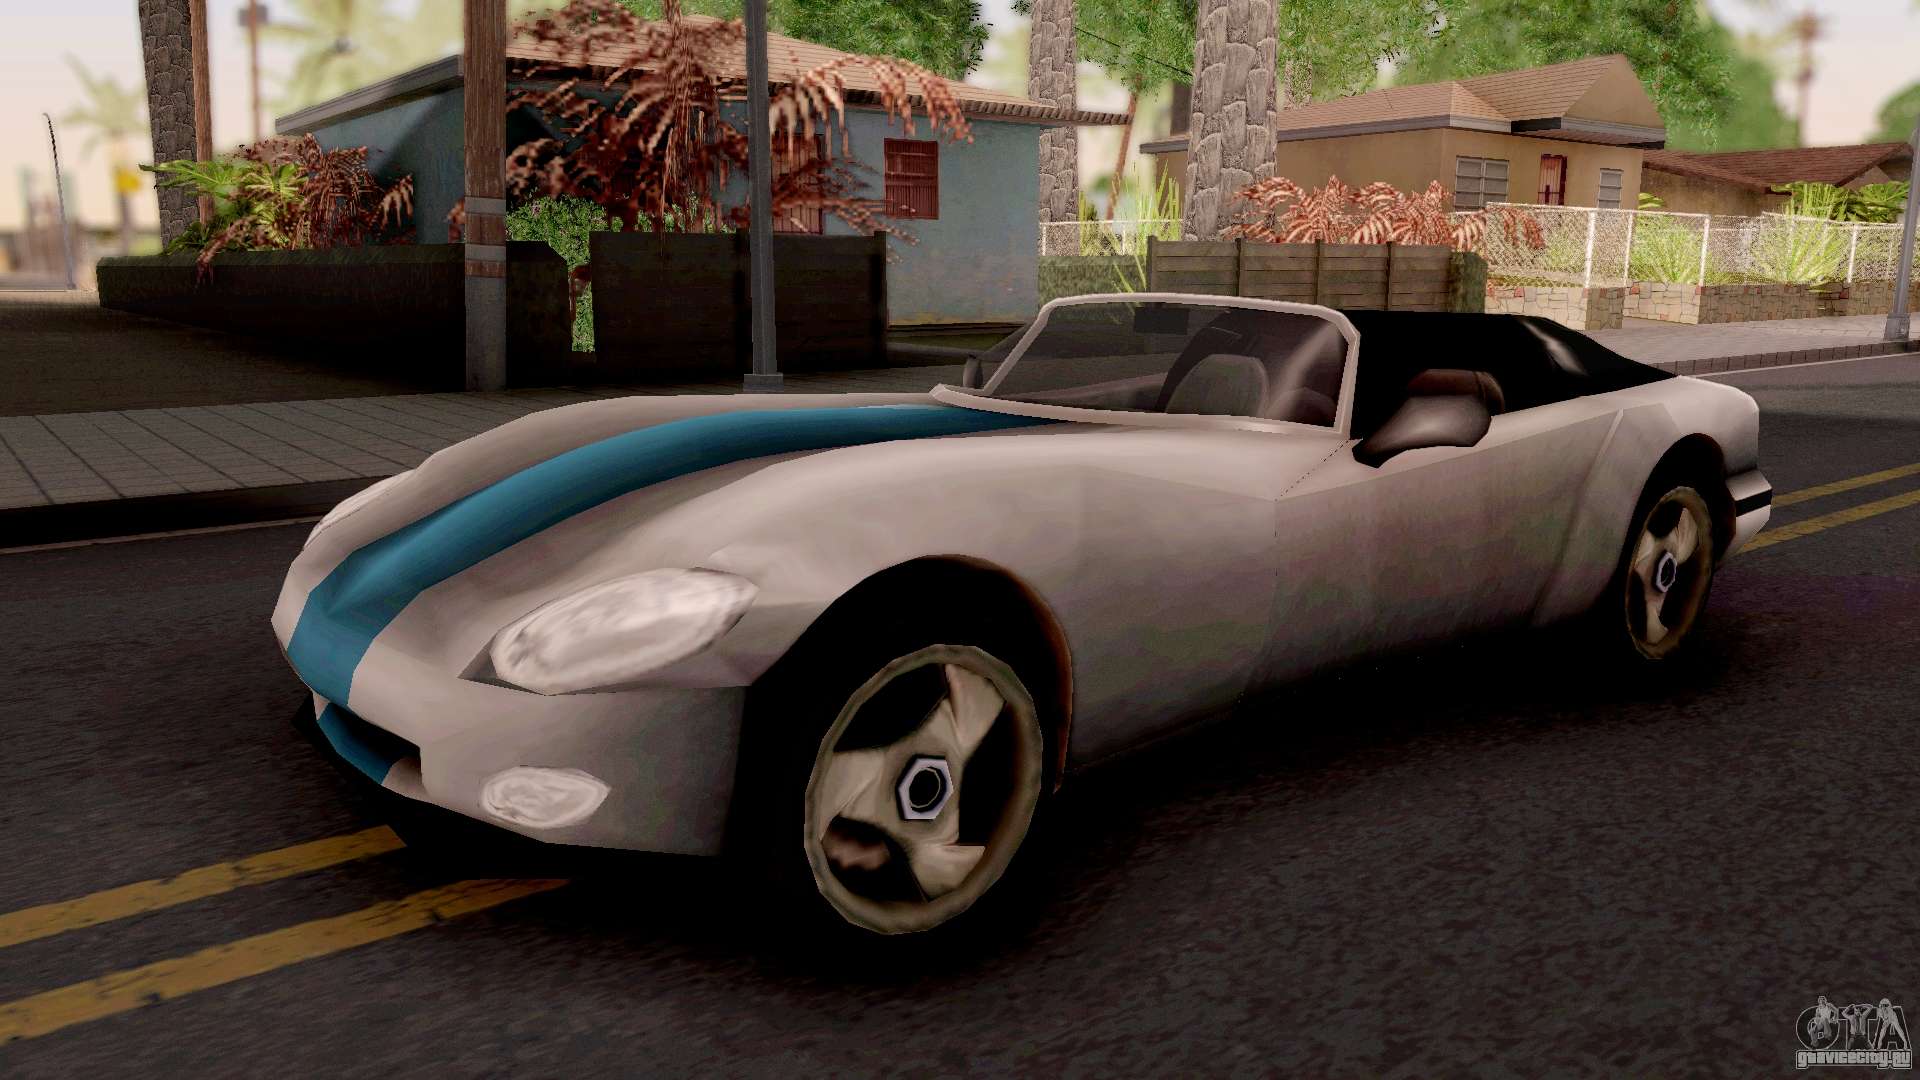 Скриншот Grand Theft Auto III/ GTA 3 - Steam Key GLOBAL GTA